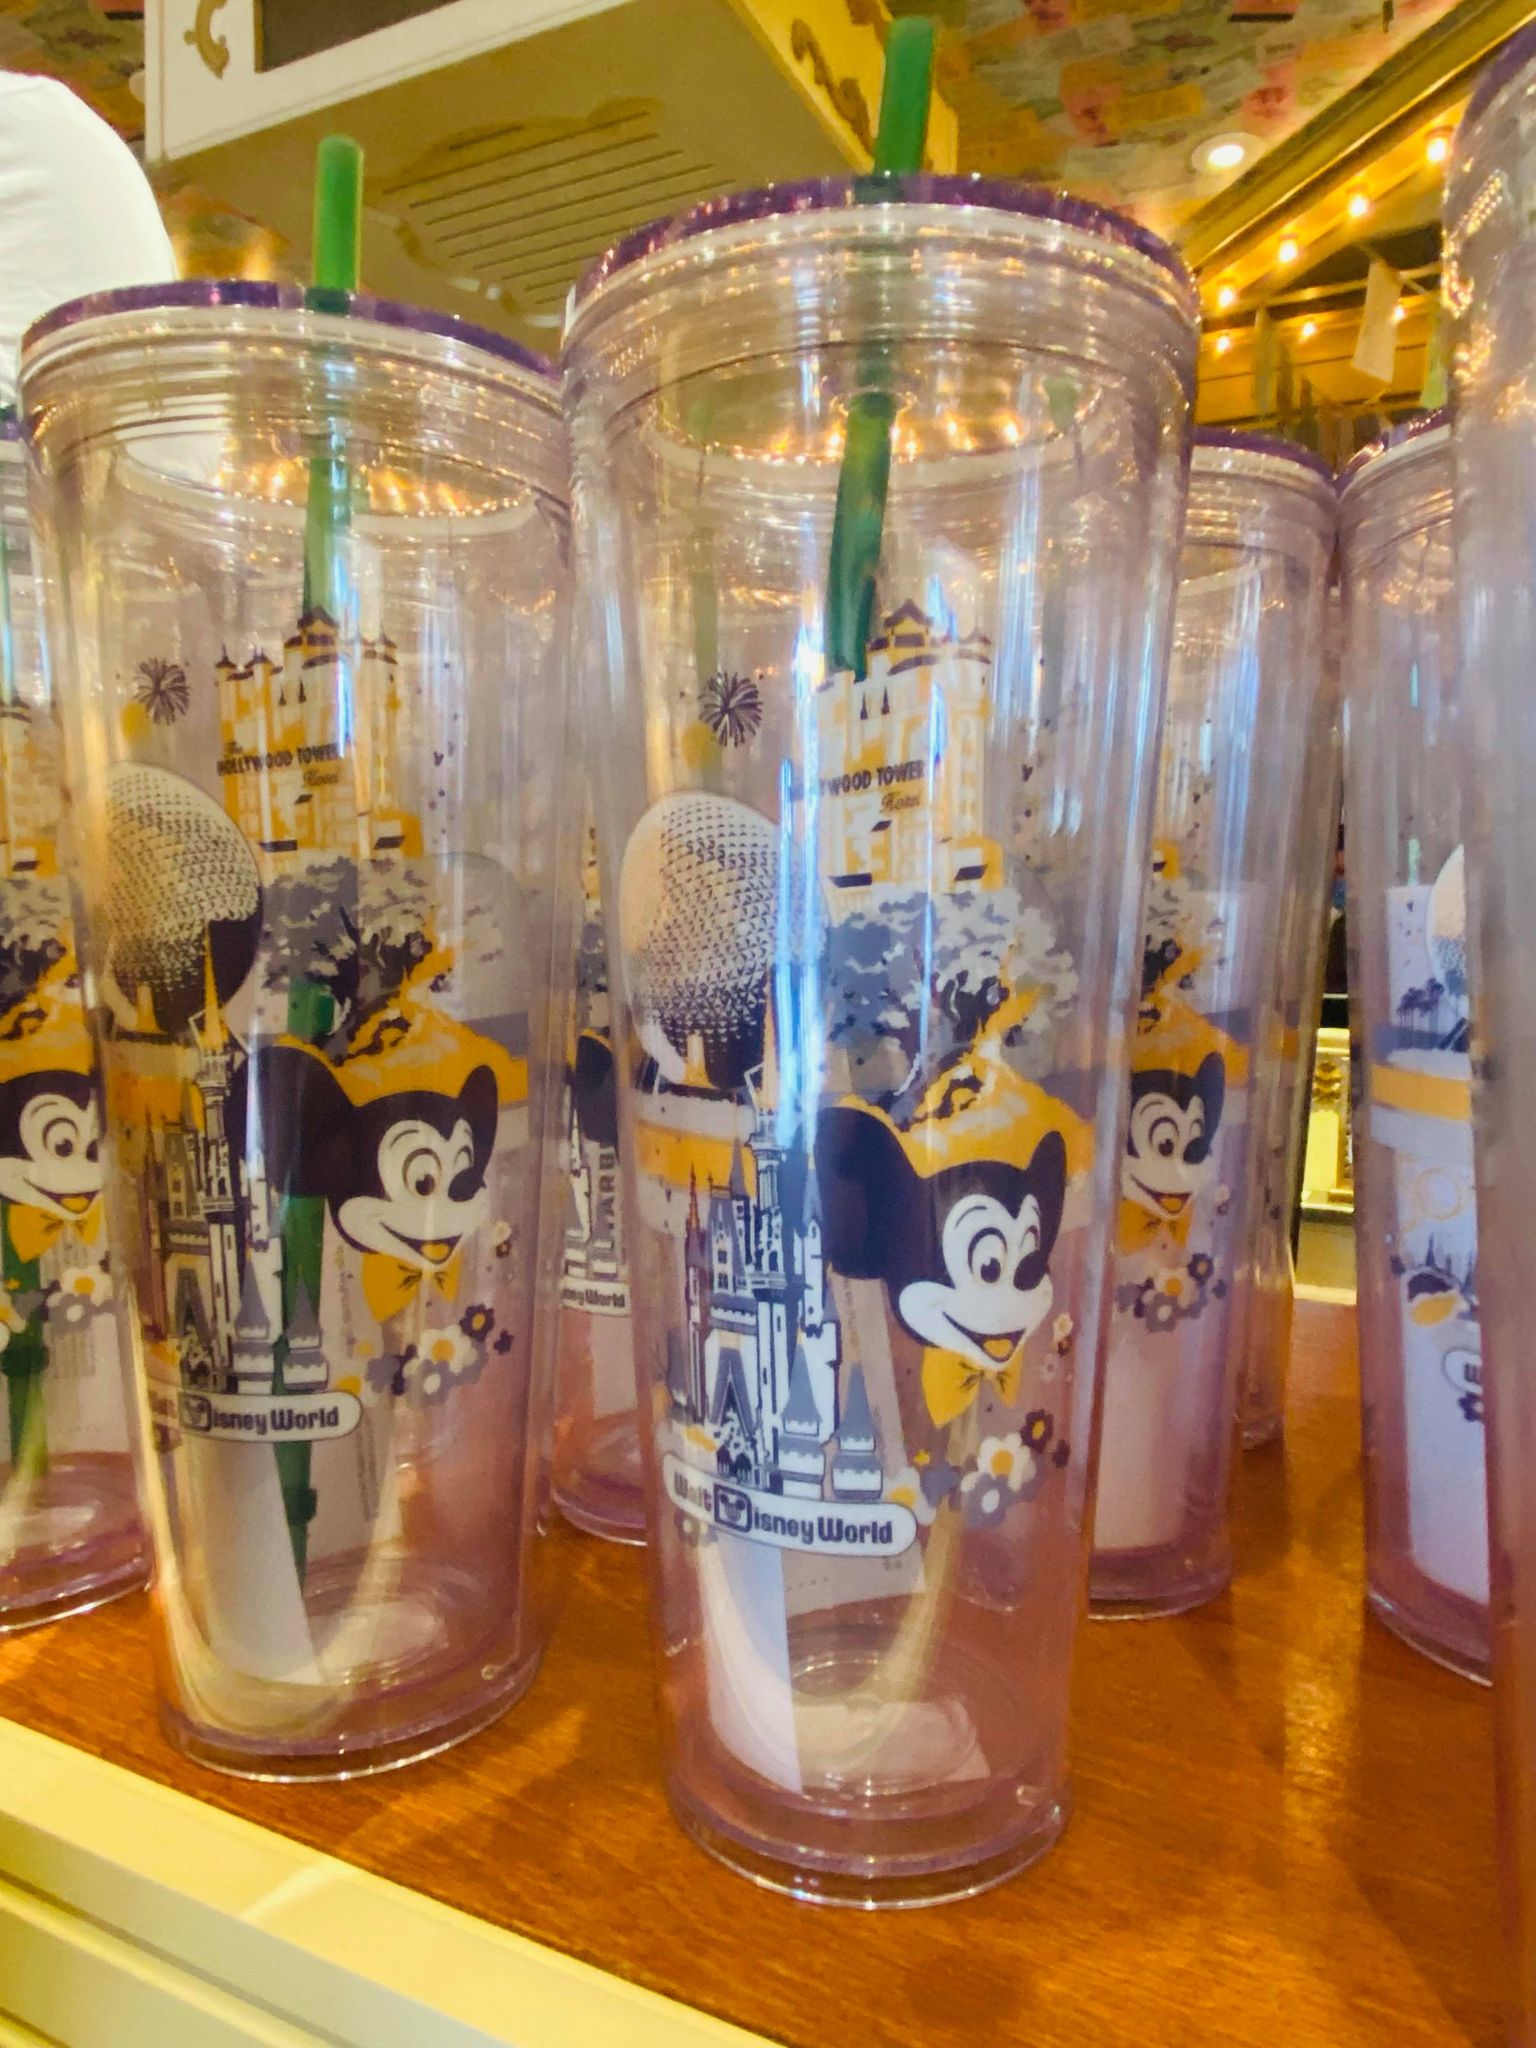 HURRY! The Popular Disney World 50th Anniversary Starbucks Tumbler